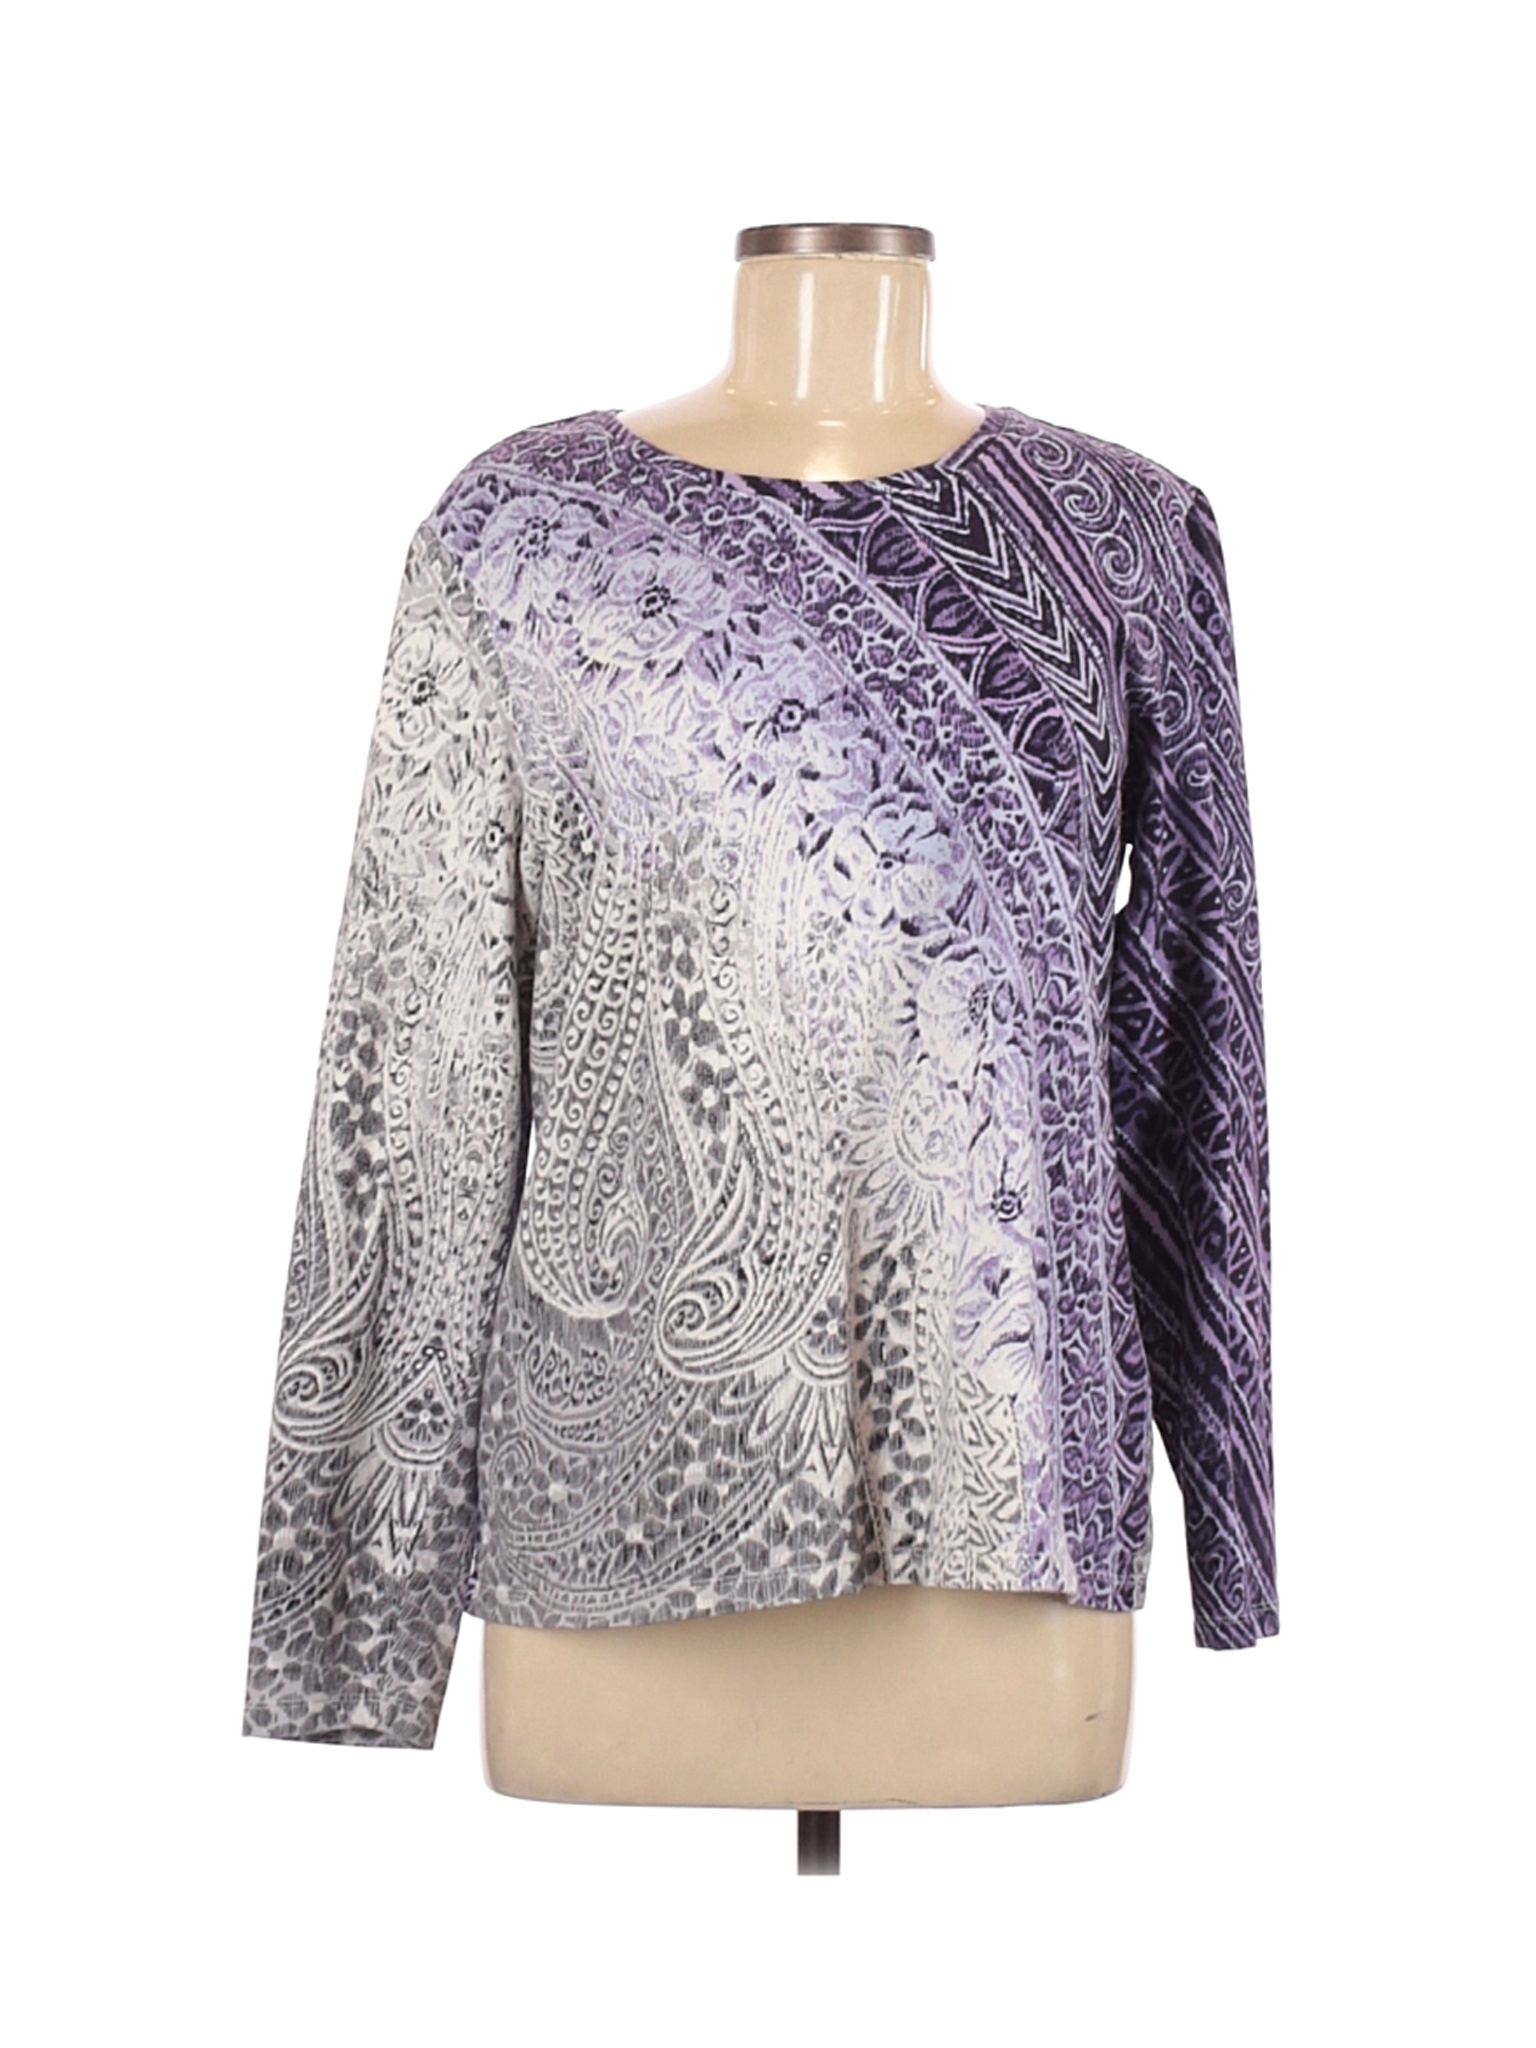 Christopher & Banks Women Purple Long Sleeve Top M | eBay